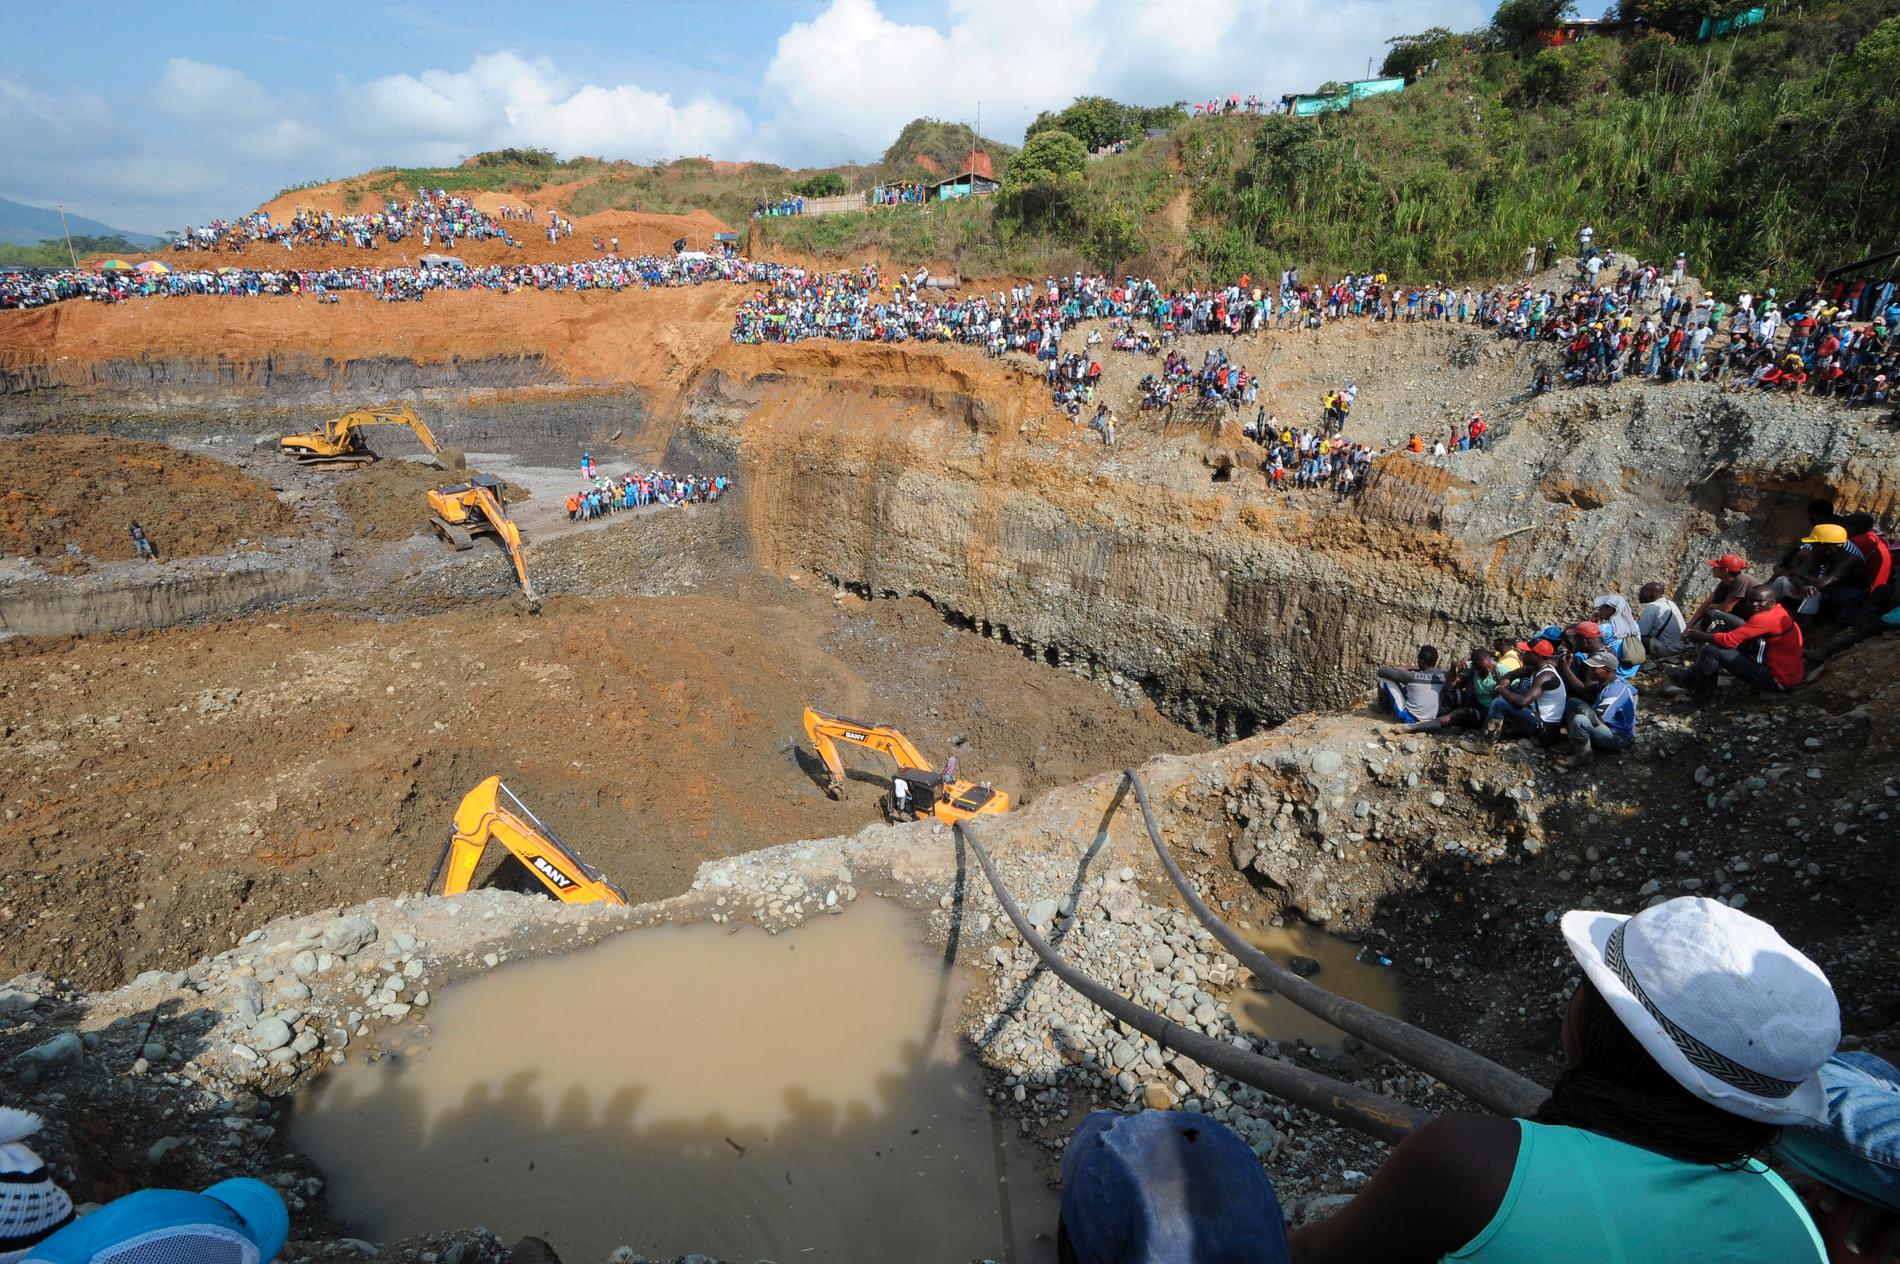 Letande efter överlevande efter en tidigare gruvolycka i Colombia. Arkivbild.